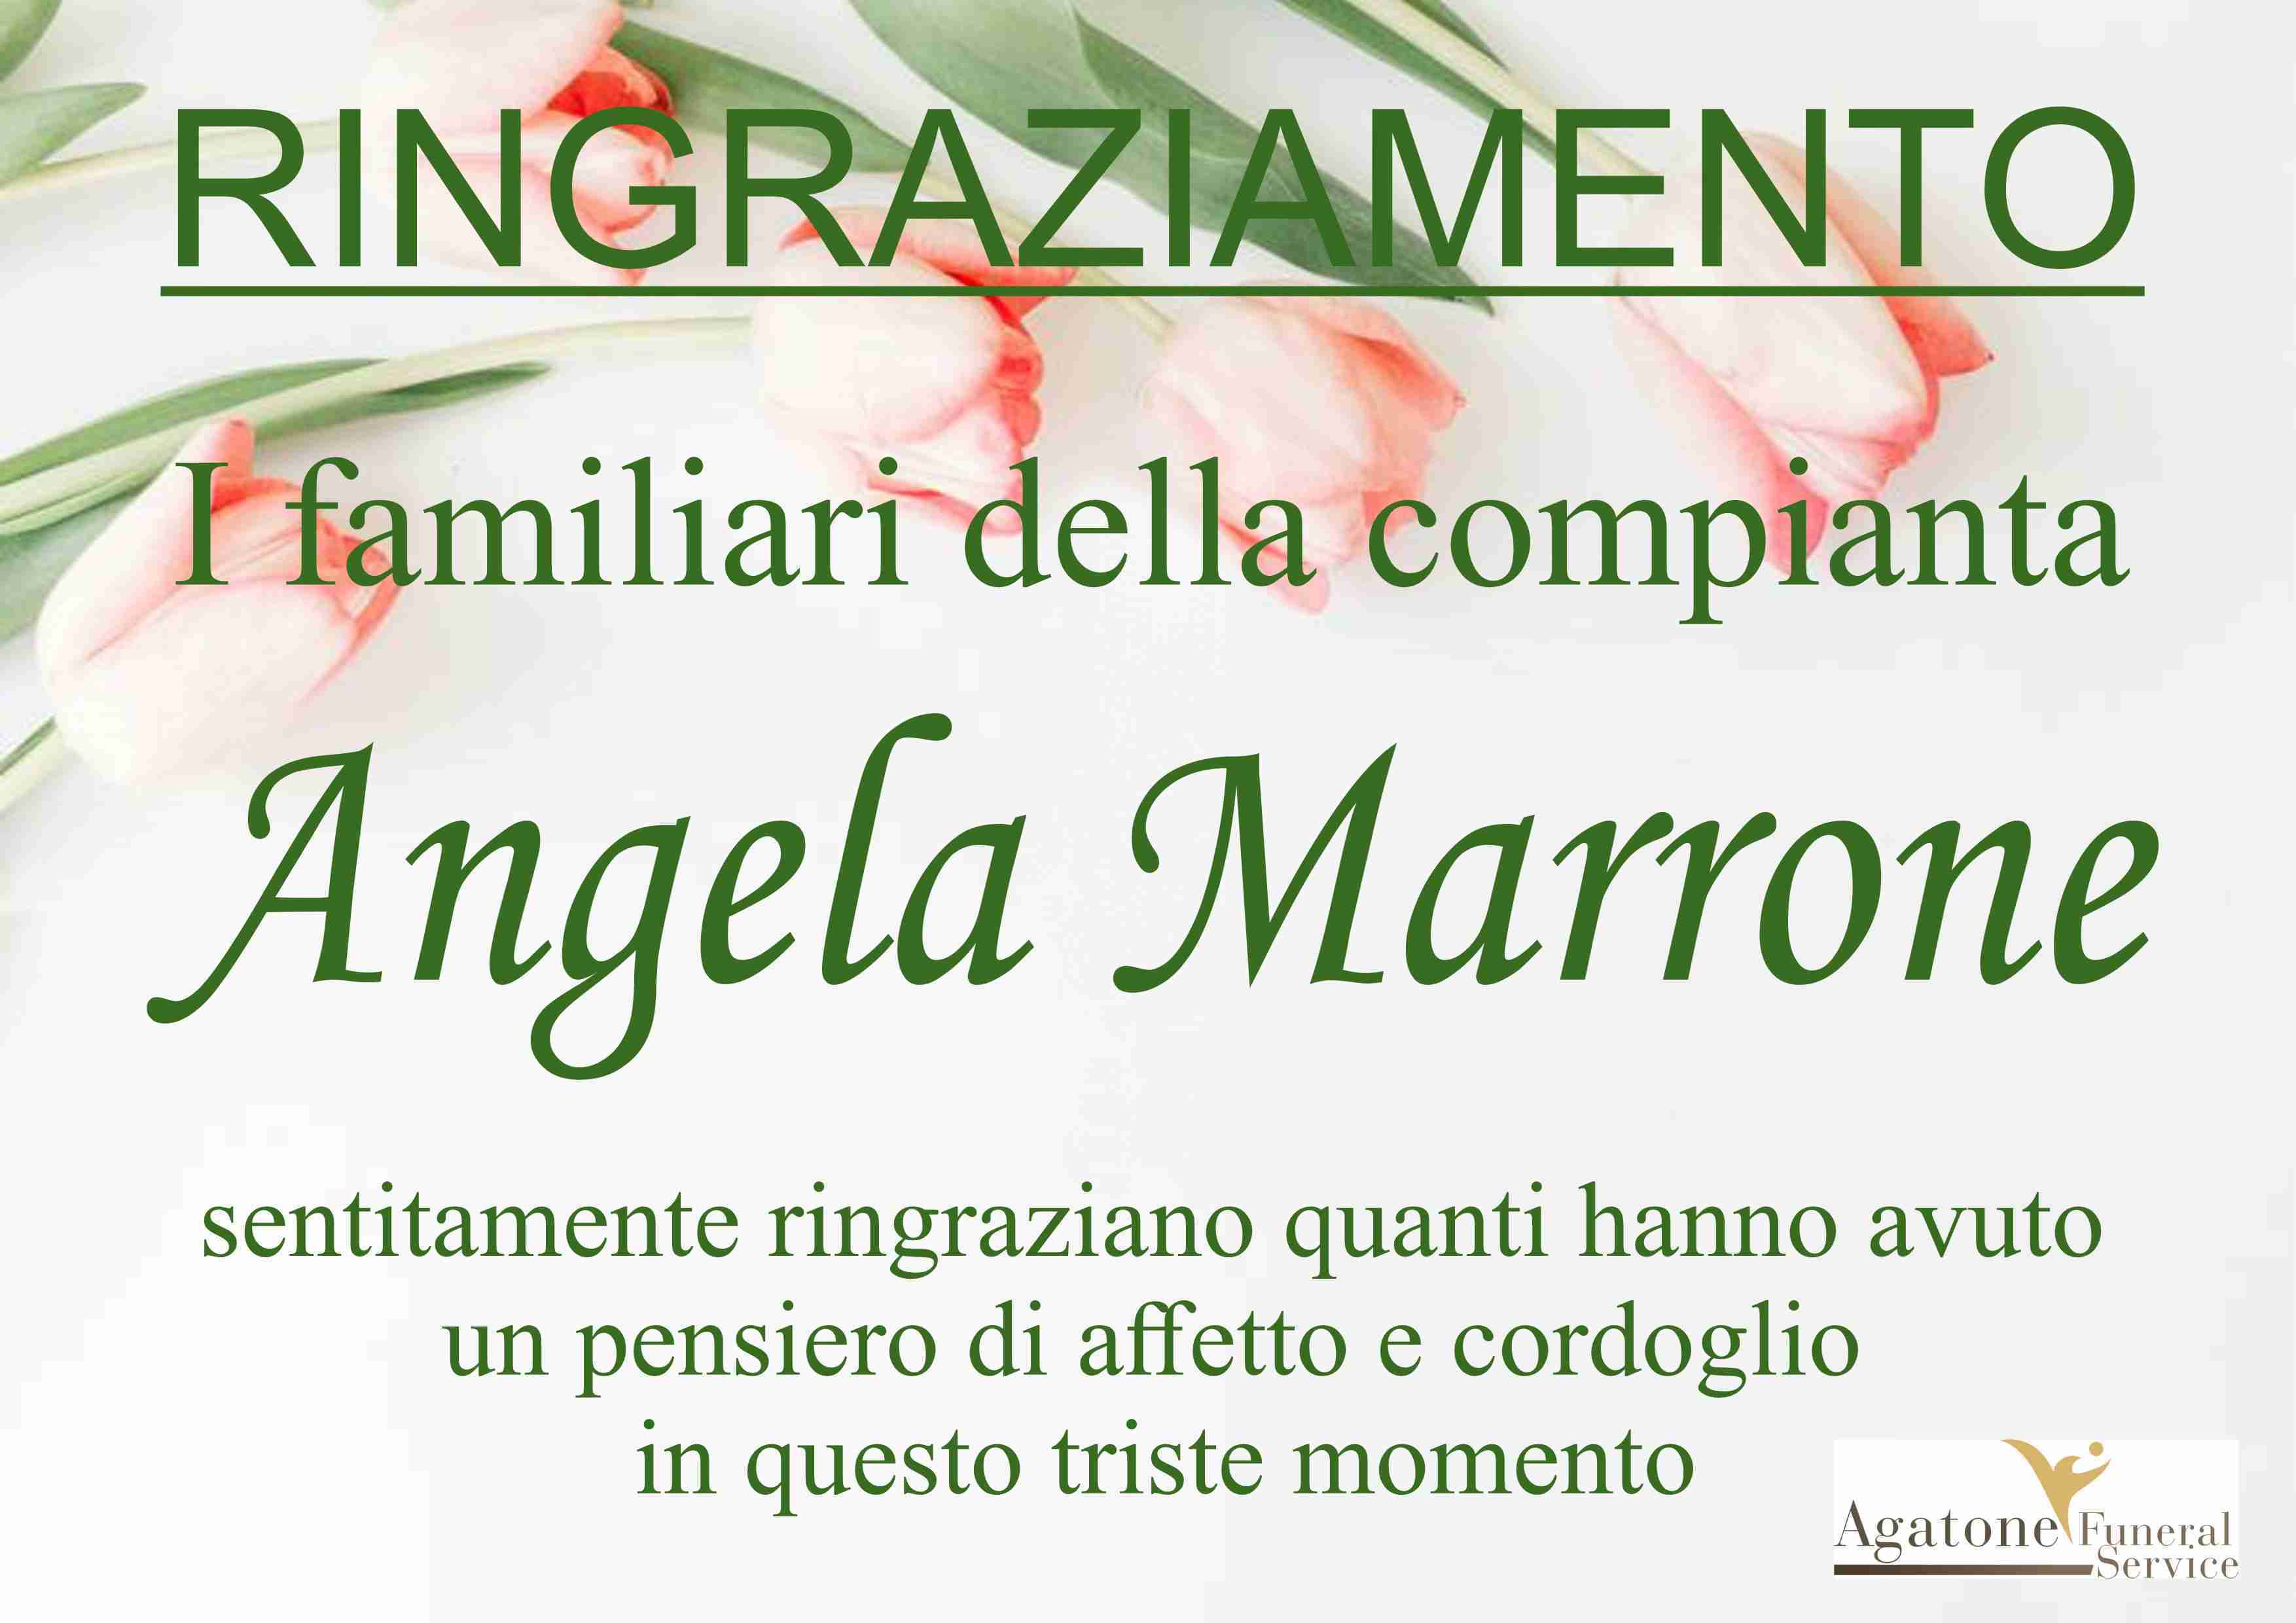 Angela Maria Marrone